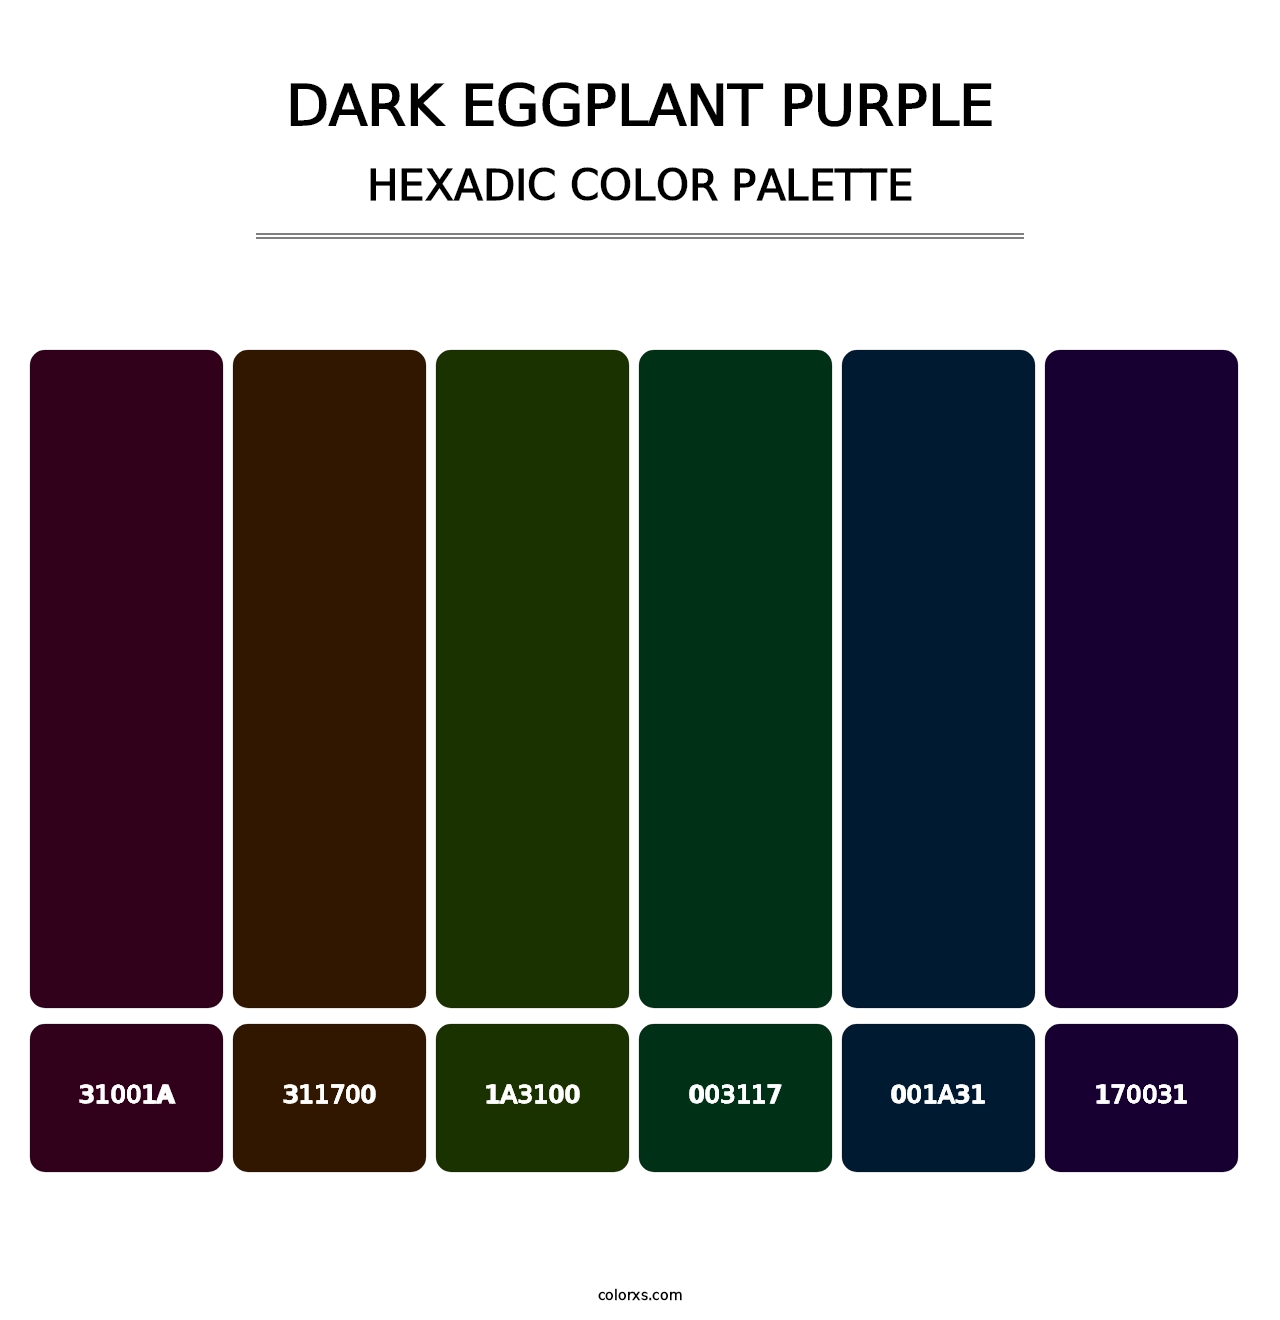 Dark Eggplant Purple - Hexadic Color Palette